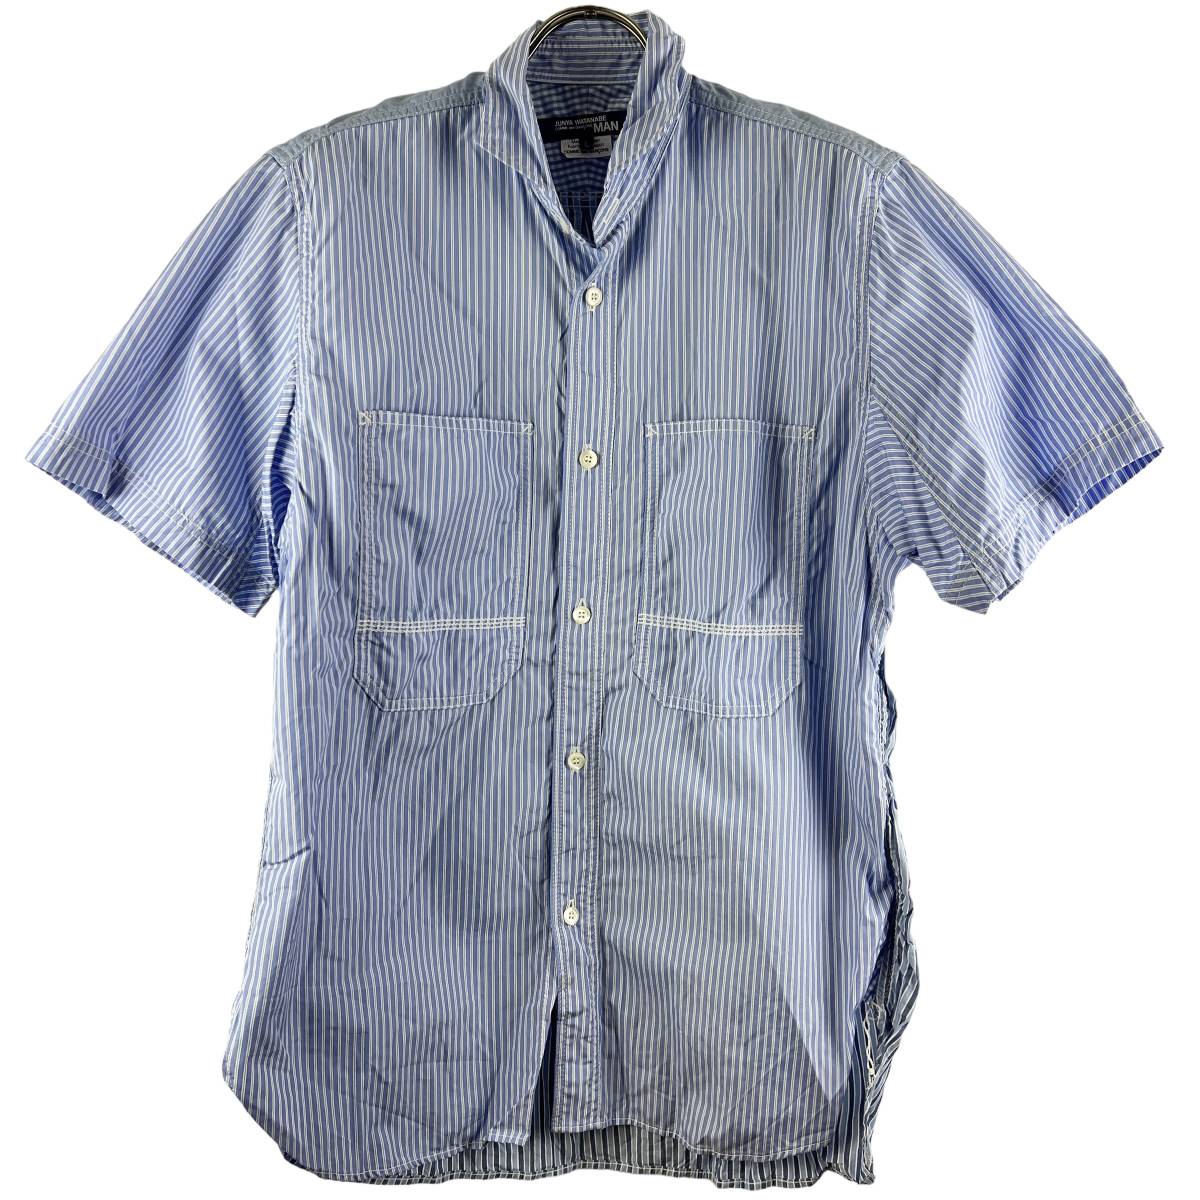 eYe JUNYA WATANABE MAN (ジュンヤワタナベ ) x COMME des GARCONS (コムデギャルソン) Shortsleeve Shirt (blue)